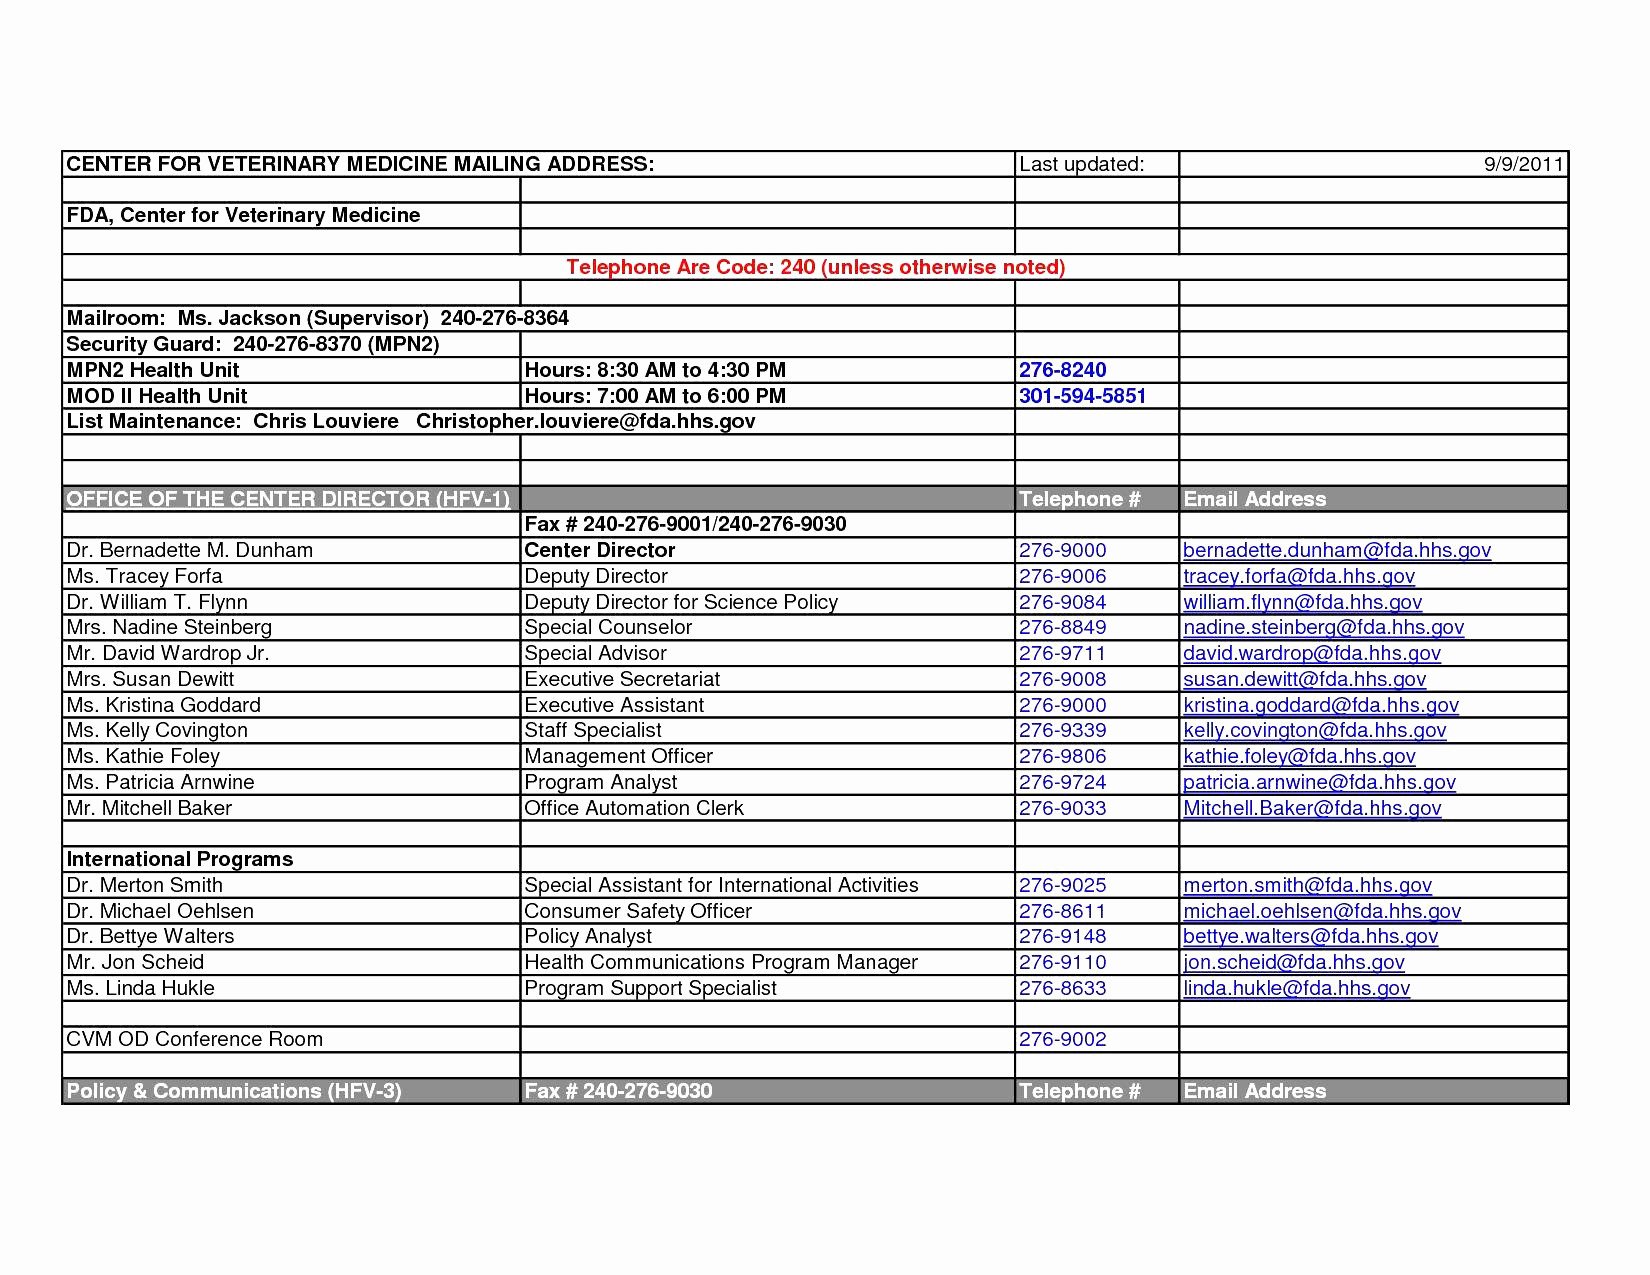 Golf Tournament Excel Spreadsheet Printable Spreadshee